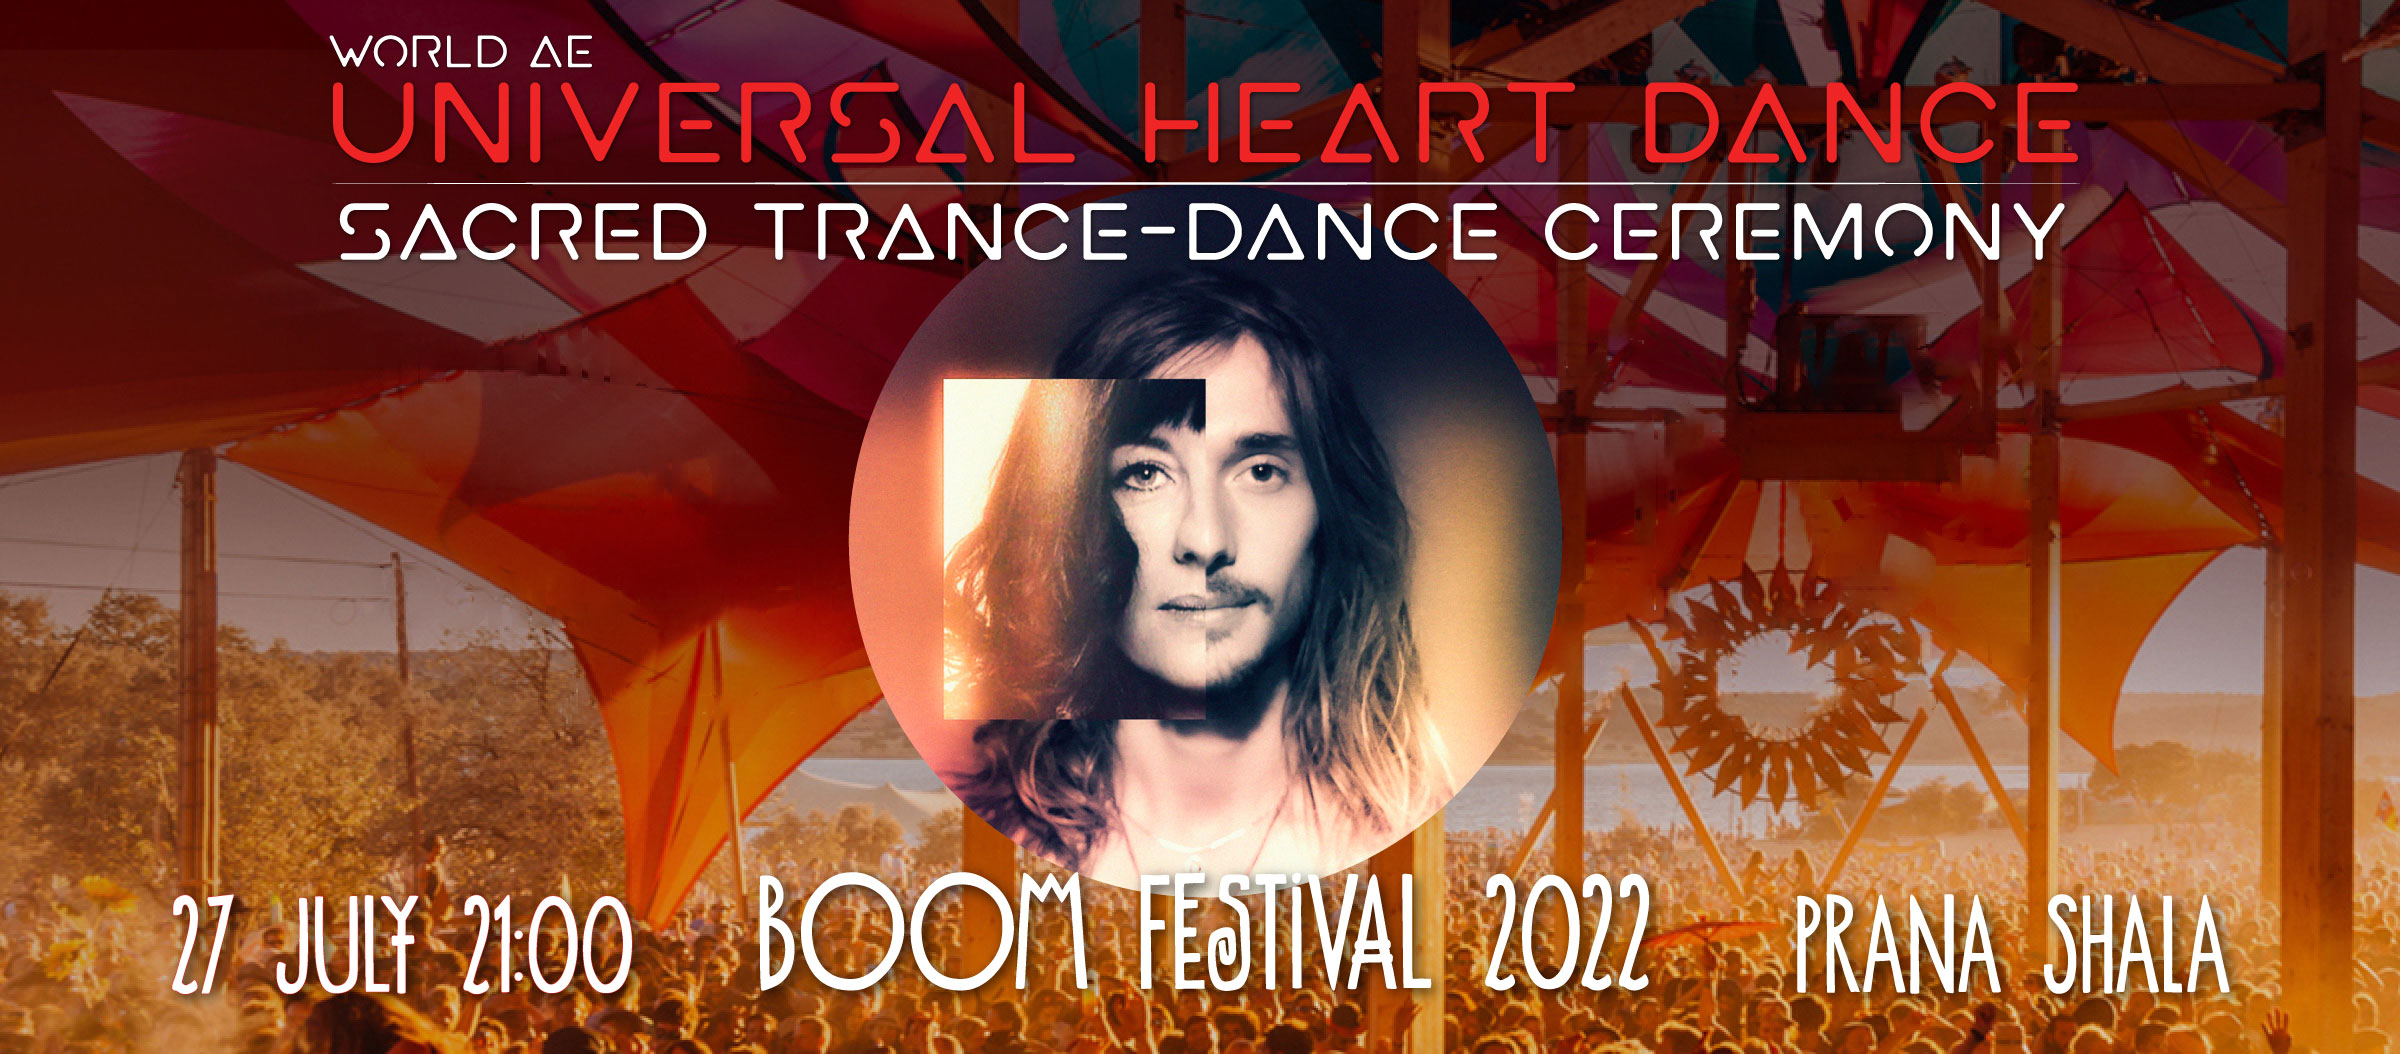 World Ae, Boom Festival 2022, Universal Heart Dance, Portugal, Sacred Trance Dance Ceremony, Prana Shala, Being Fields, Healing Area